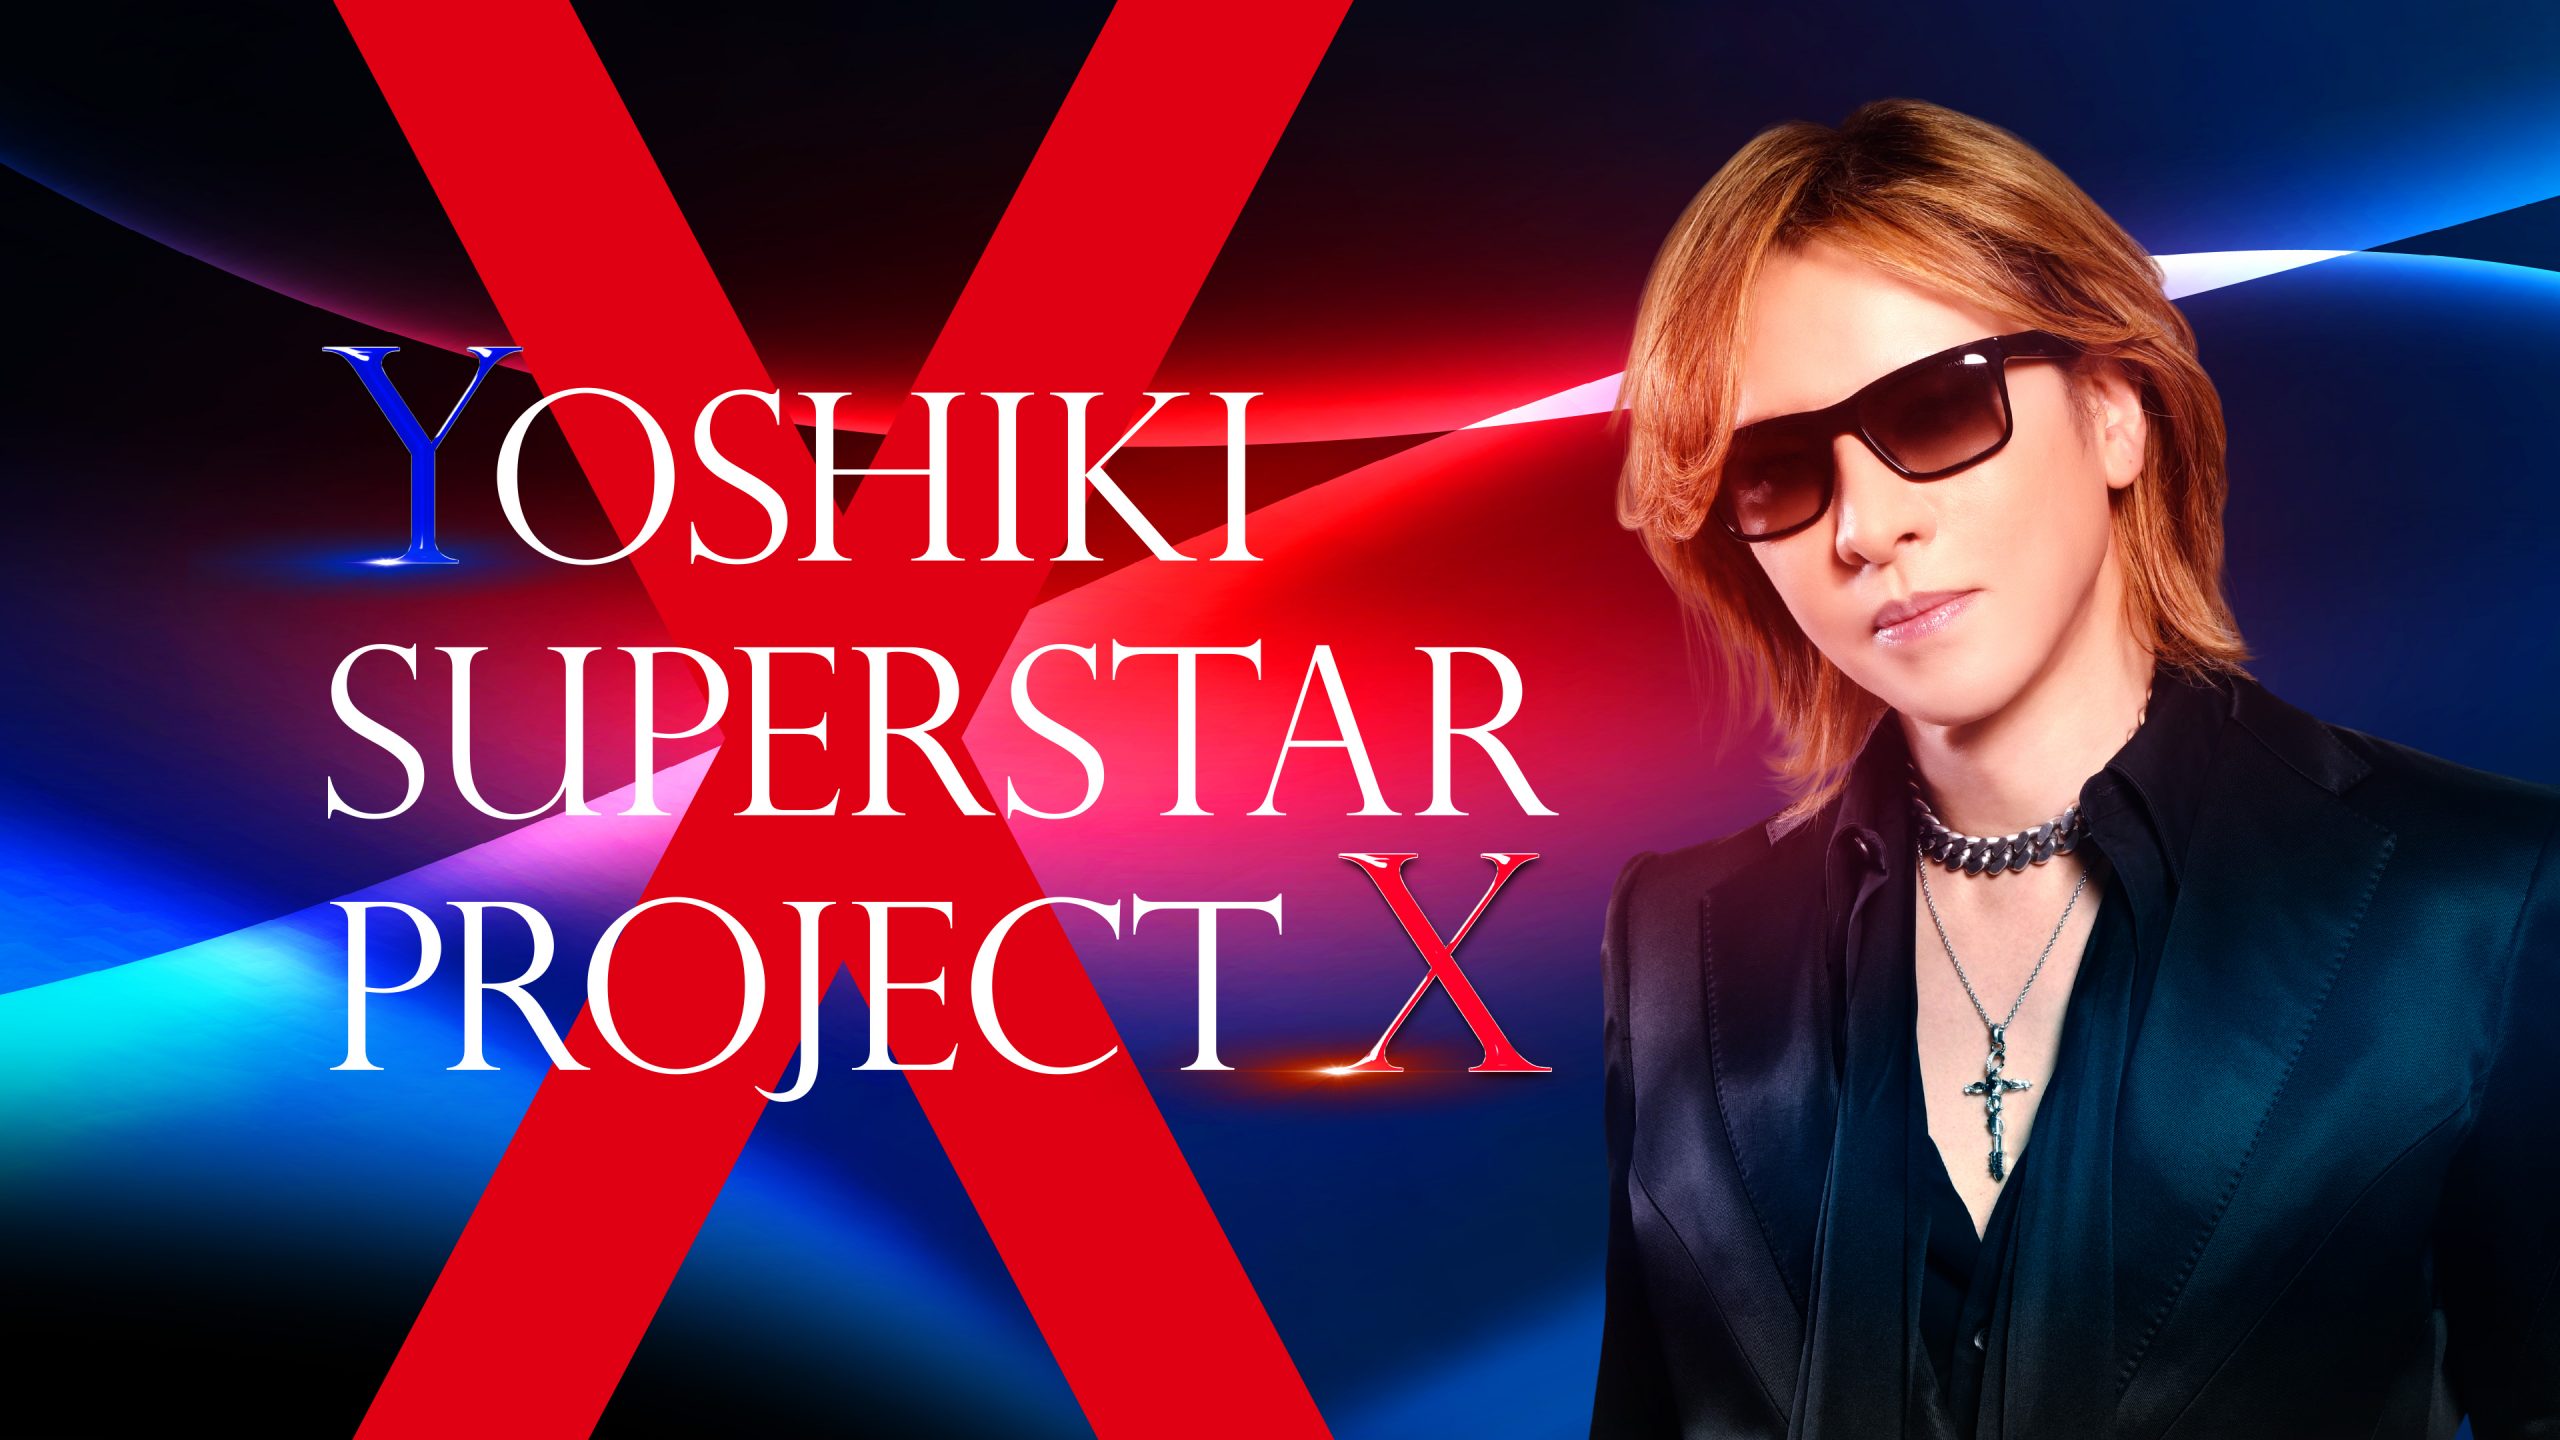 YOSHIKI SUPERSTAR PROJECT X  <br>※独占配信中